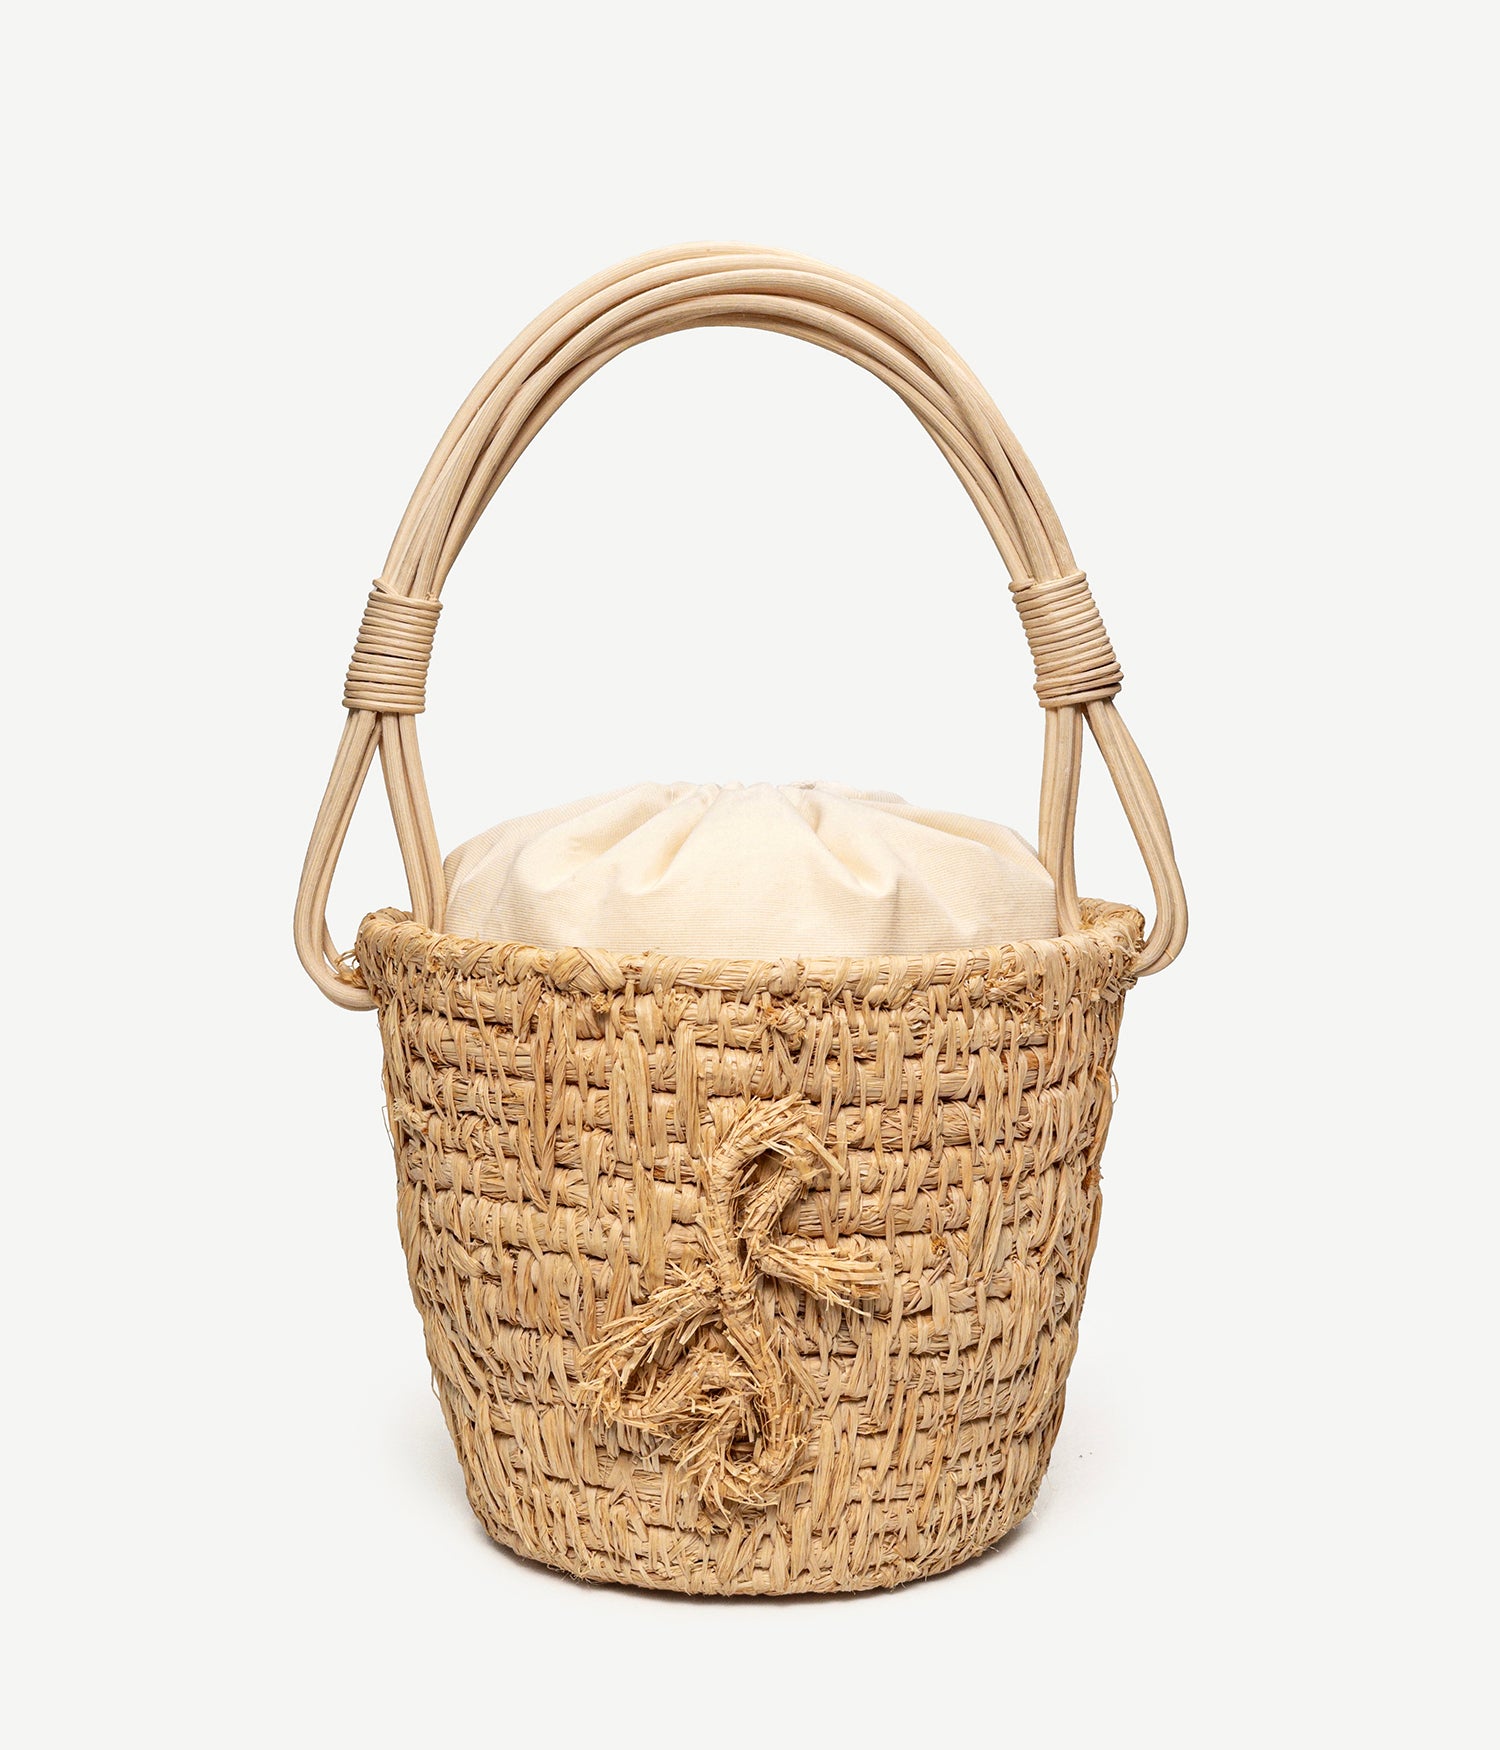 The Hay Basket Bag